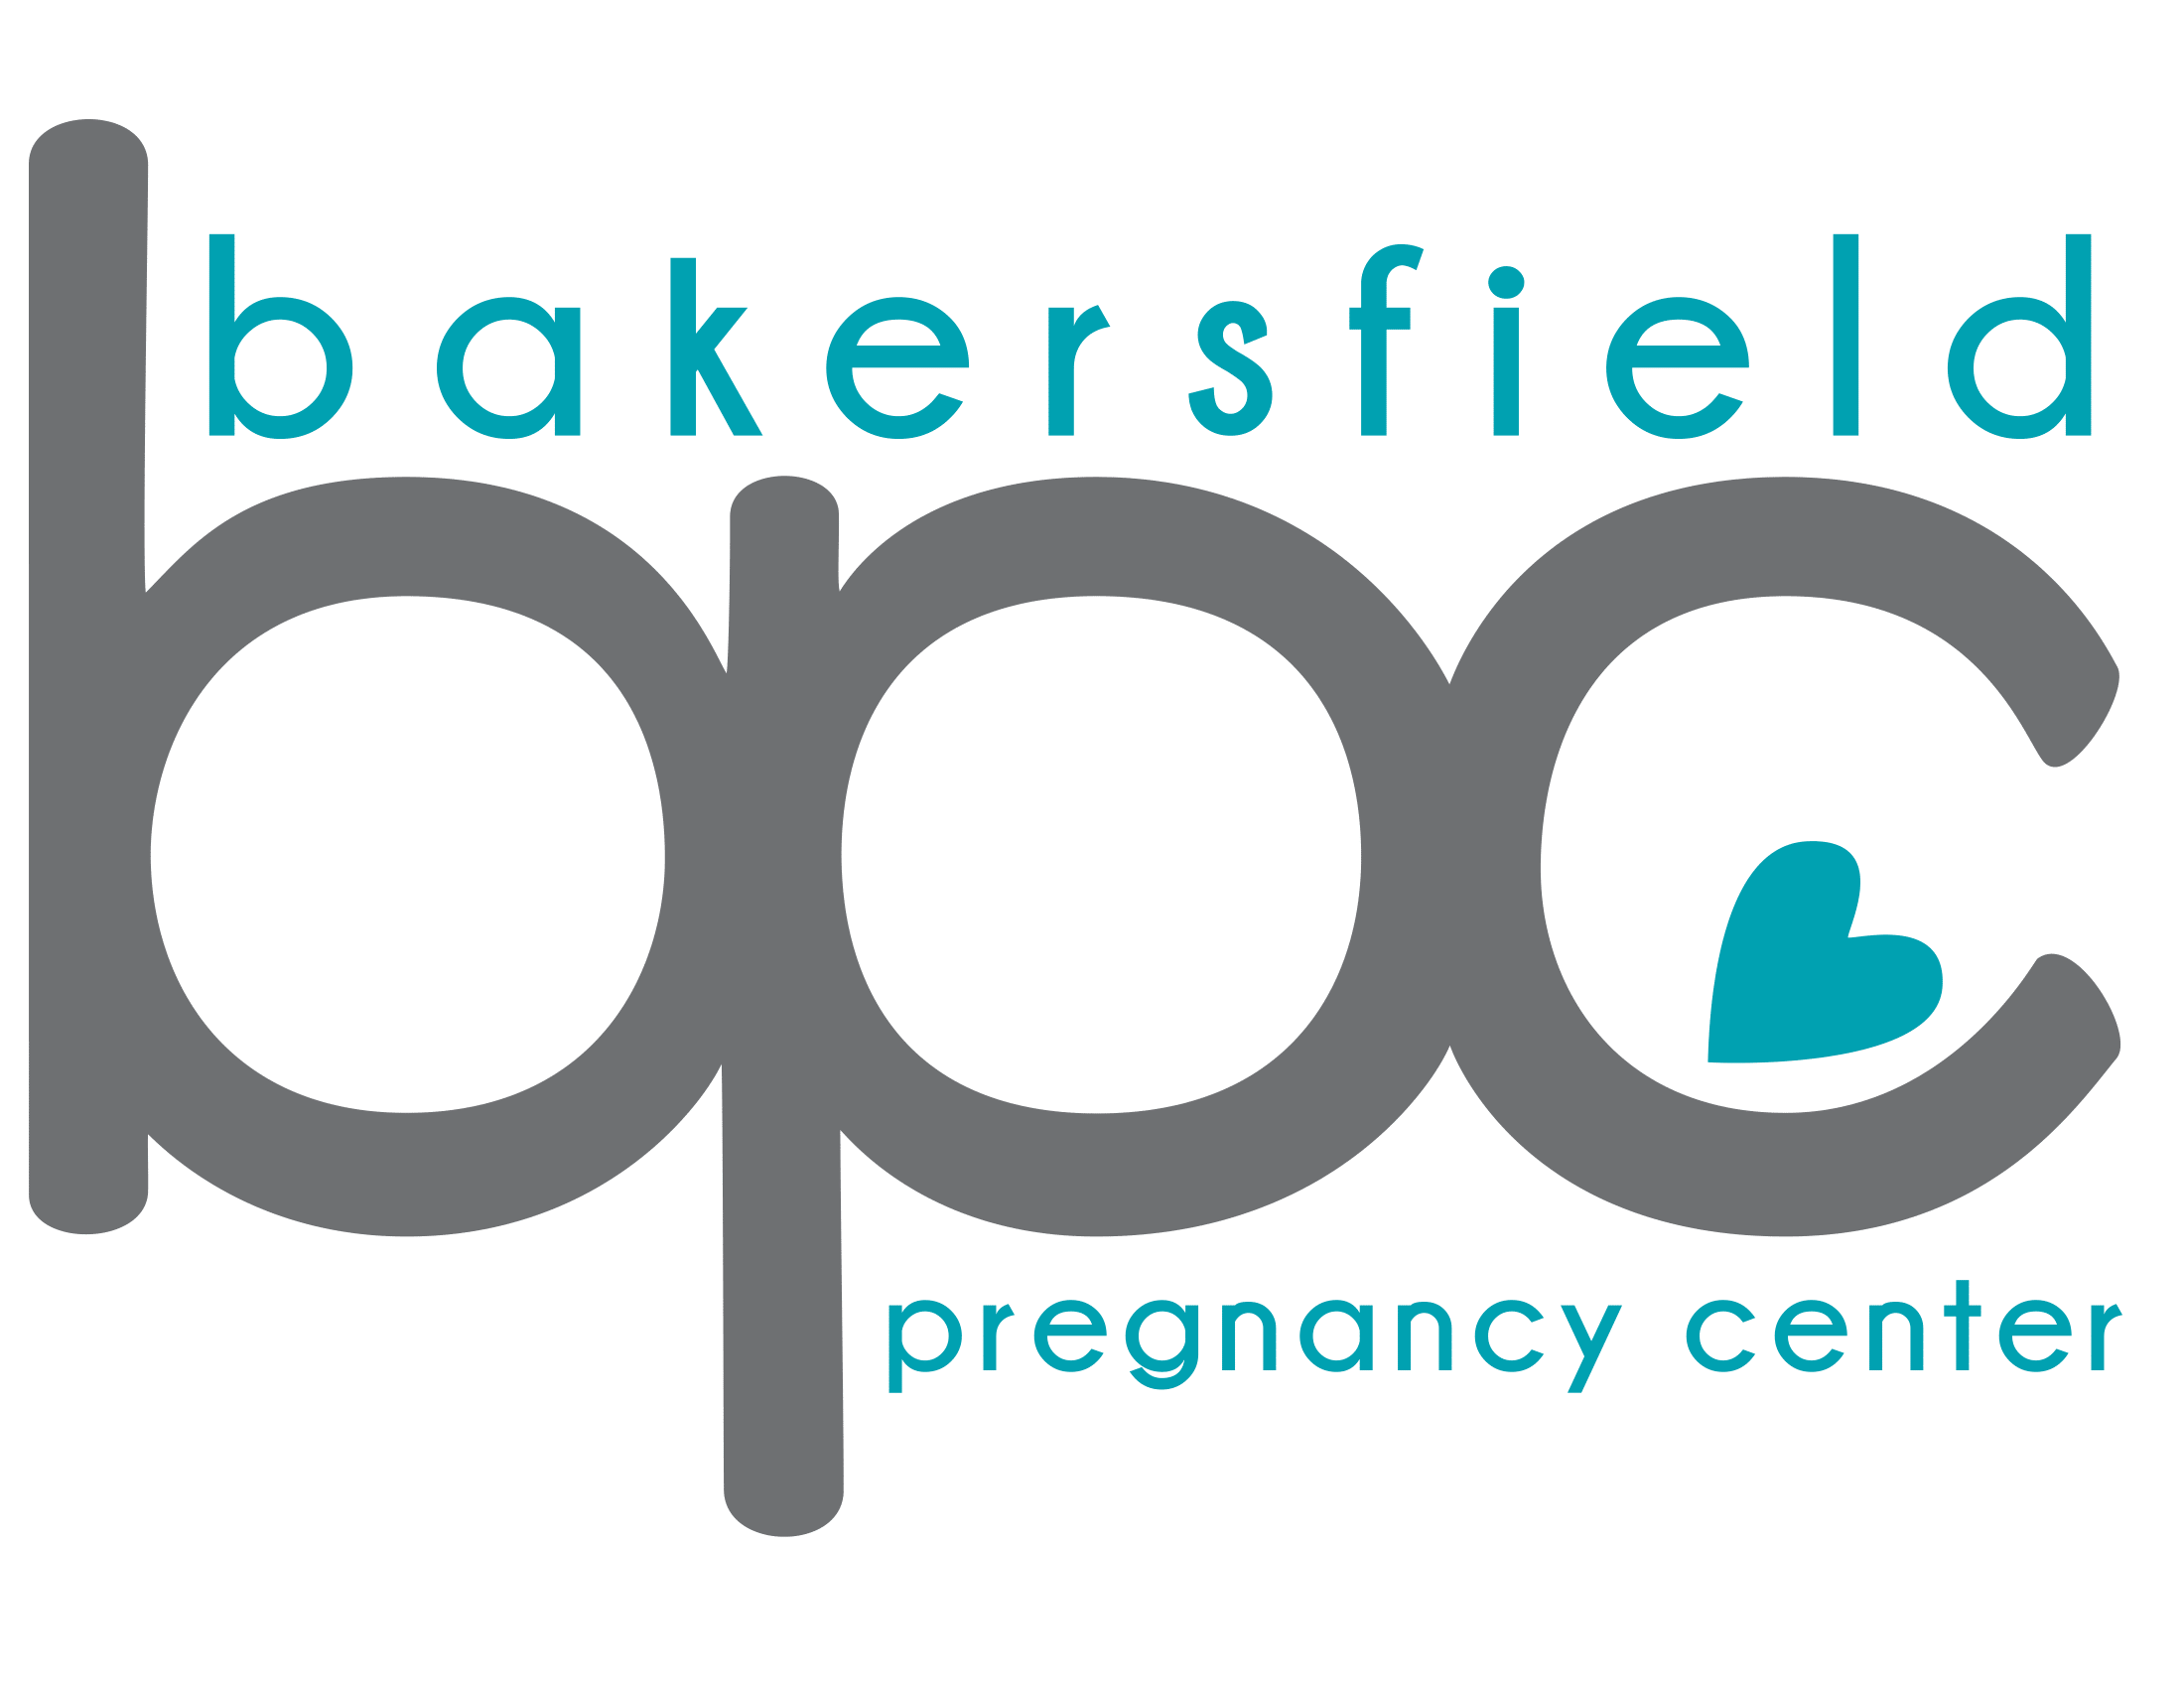 Bakersfield Pregnancy Center